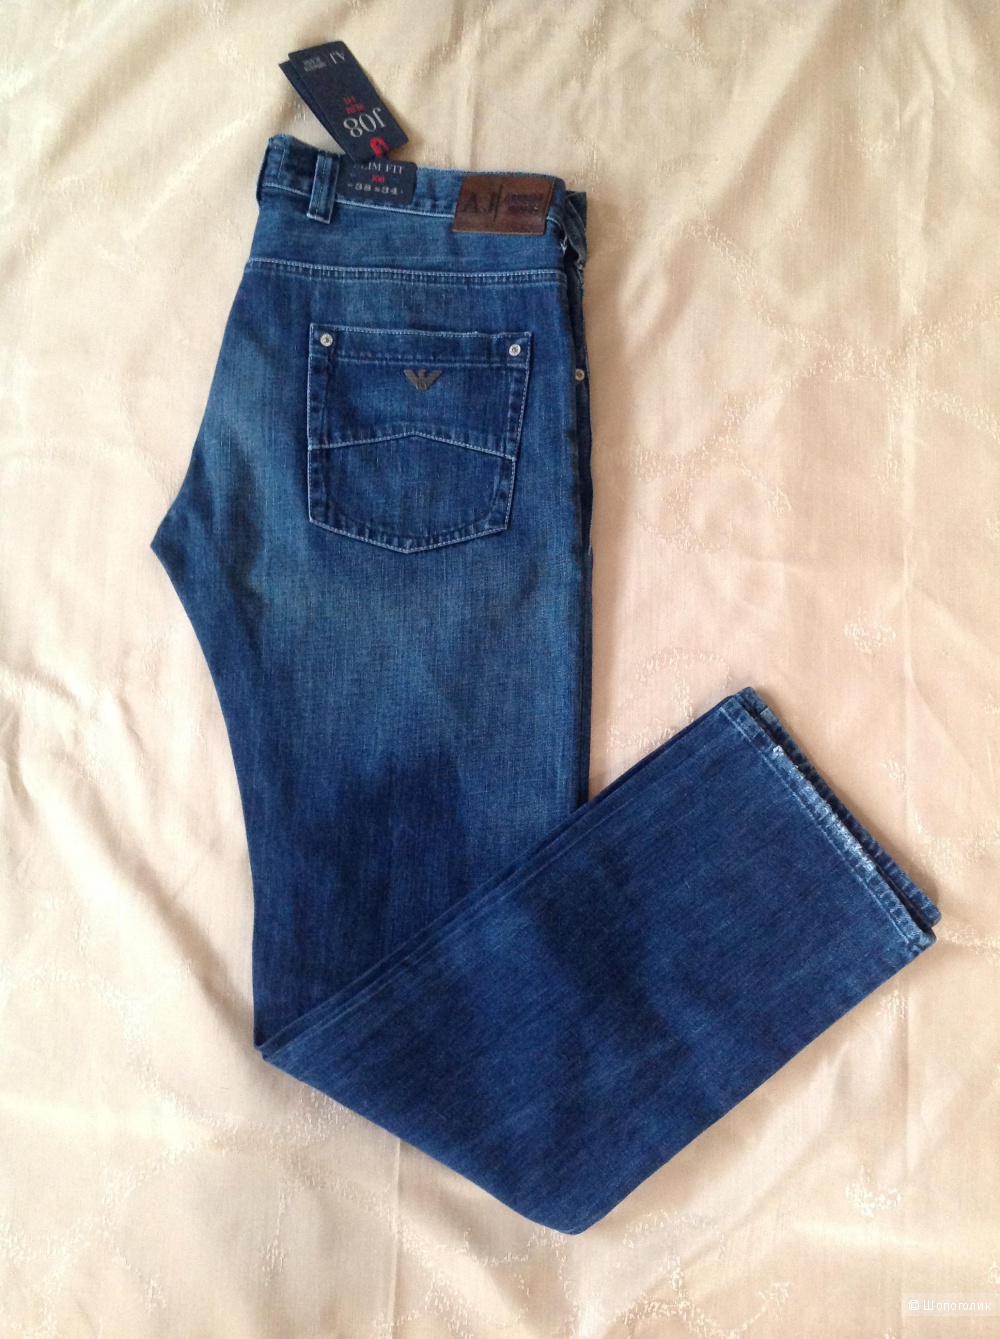 Джинсы Armani jeans J08, размер 38/34, на 52-54-56